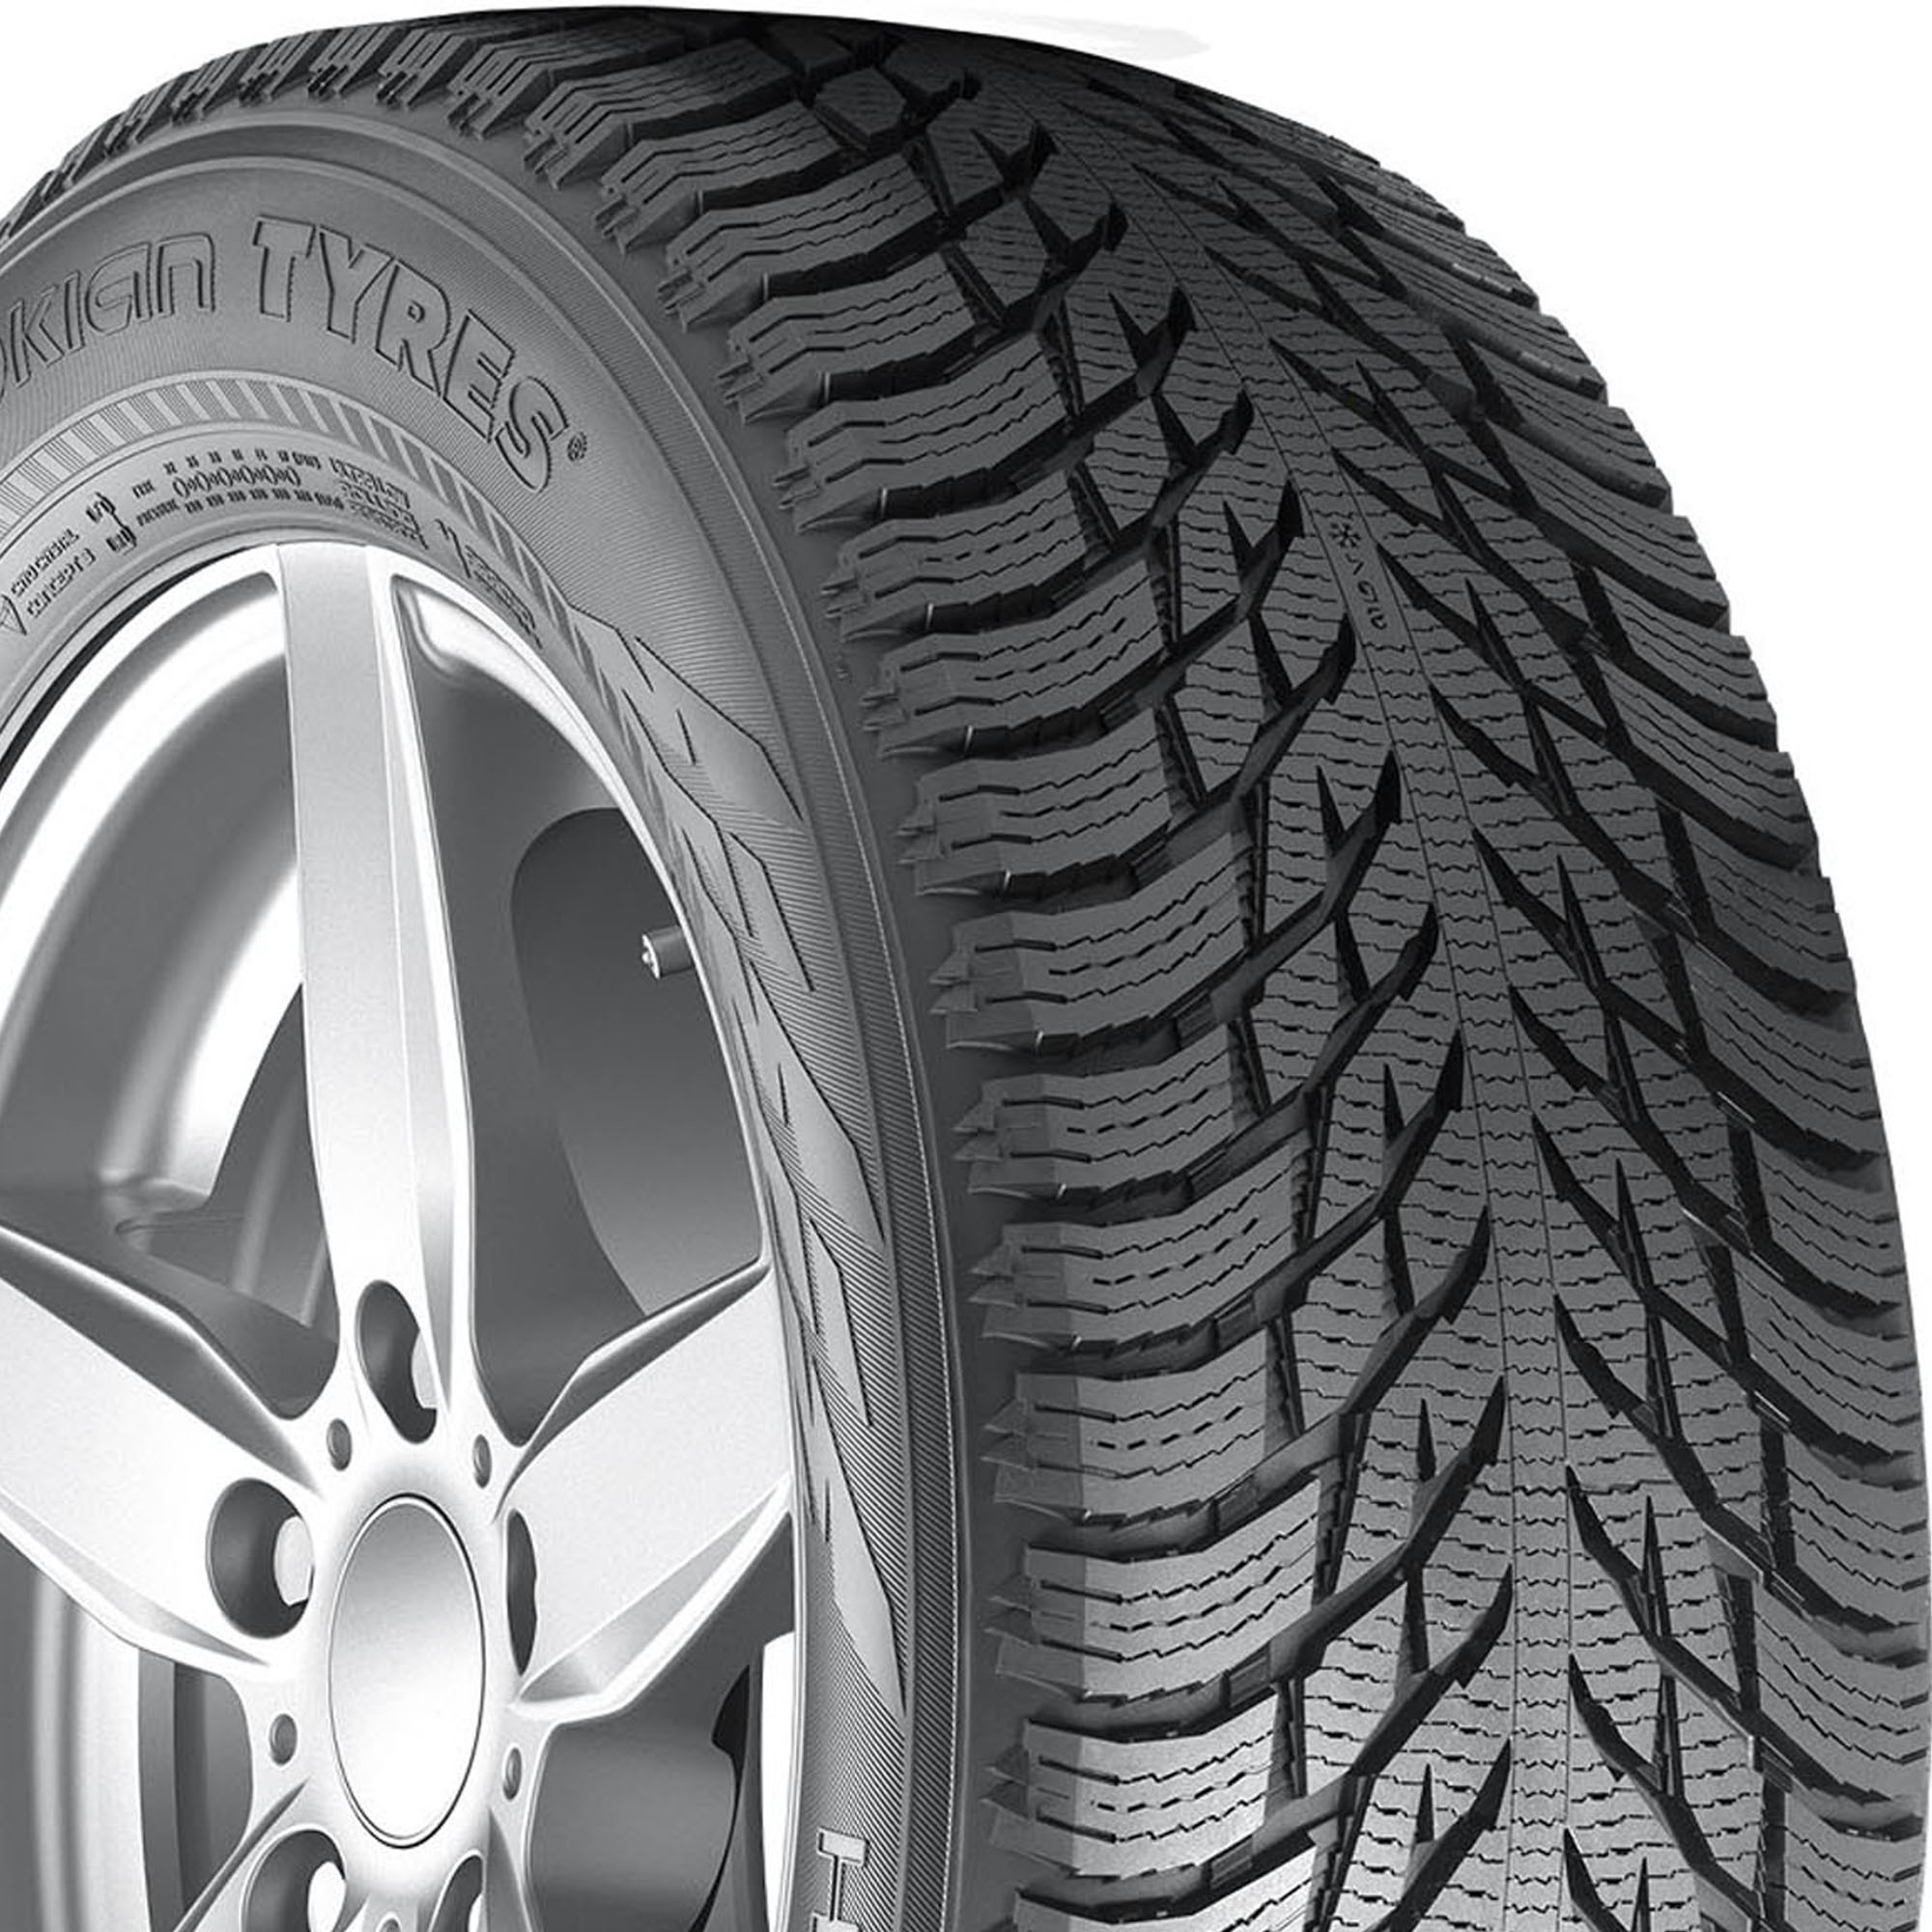 Tires - New | Suv 235/60r18 235 R3 Hakkapeliitta 2356018 1 18 eBay Nokian 60